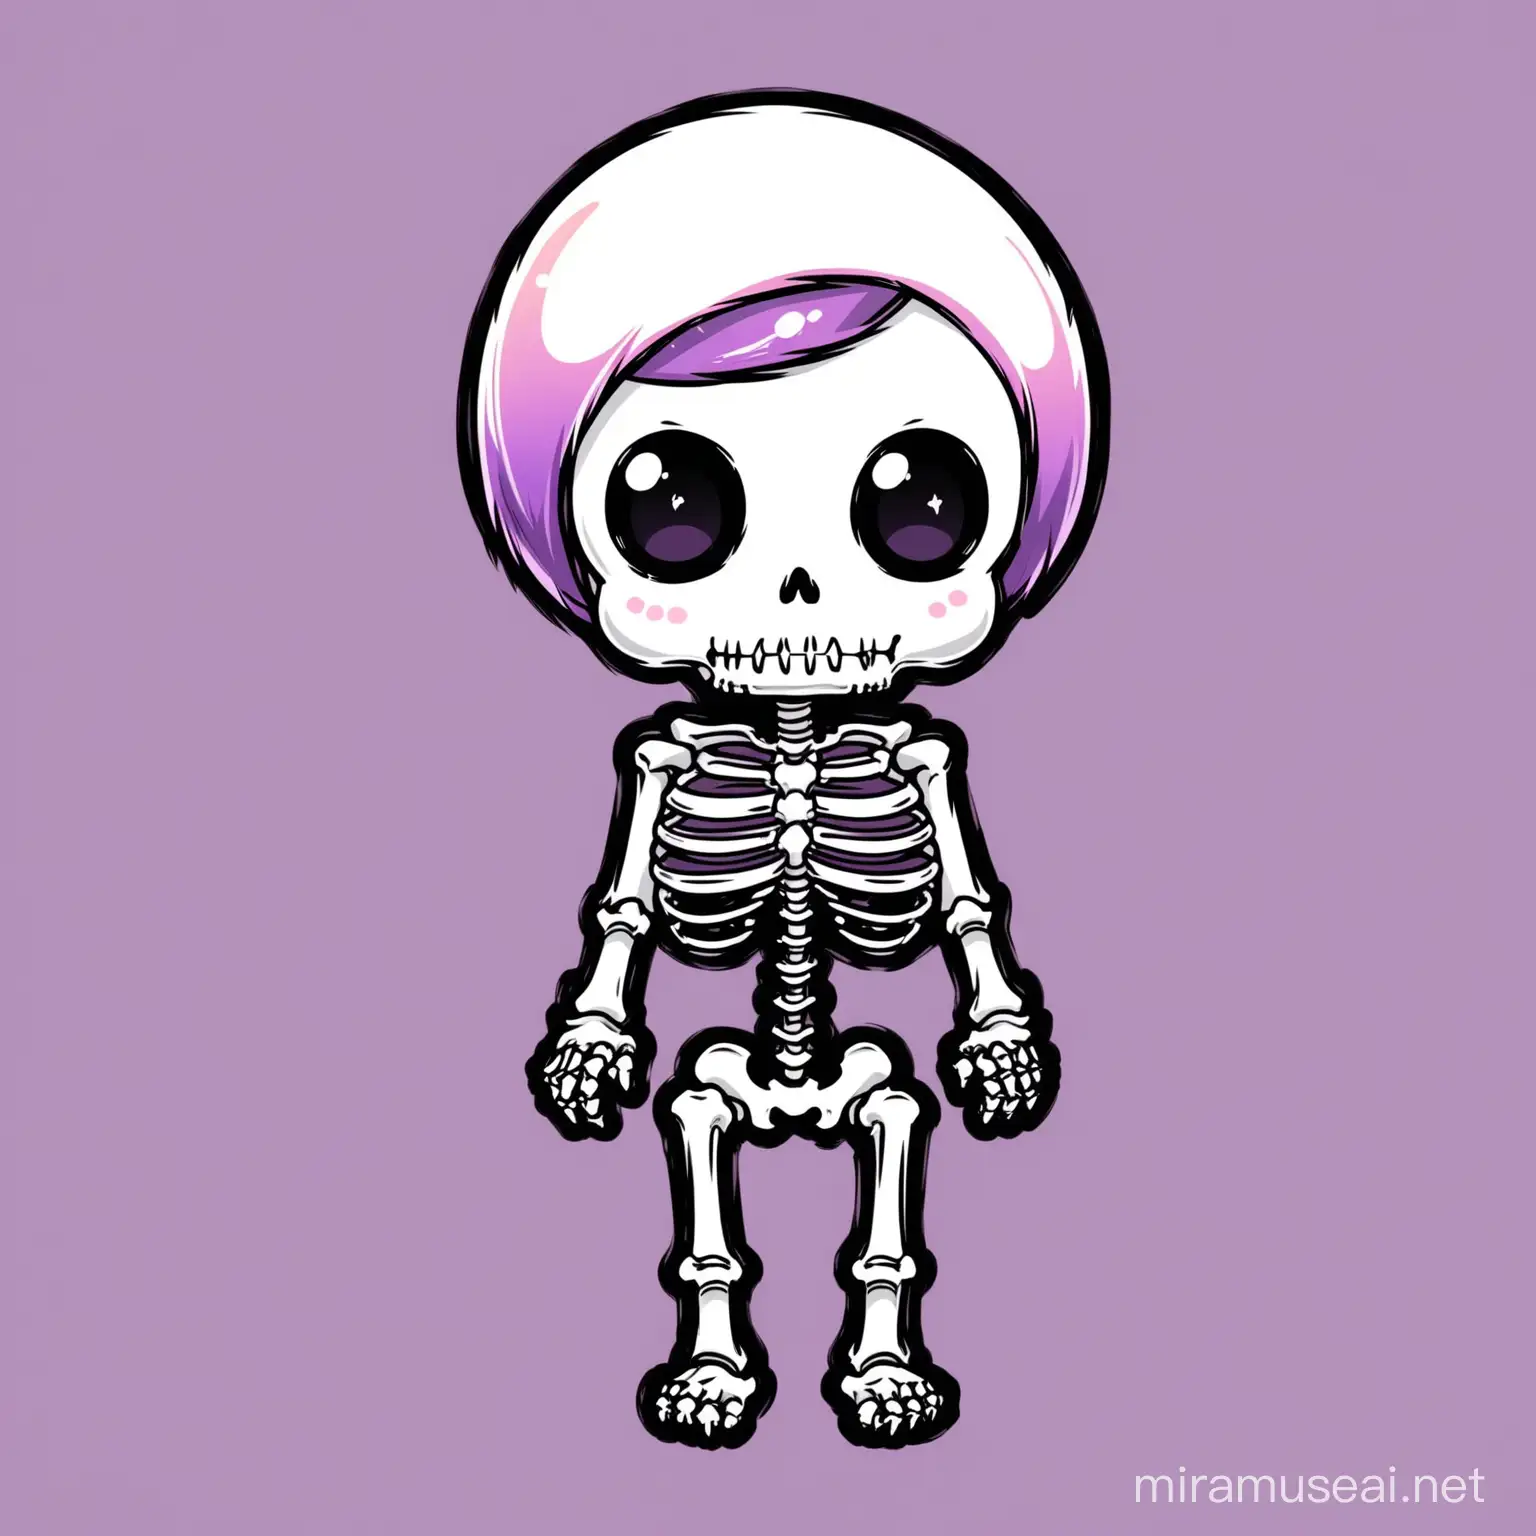 Kawaii Anime Skeleton with Eboy Aesthetic and Peeker Decal